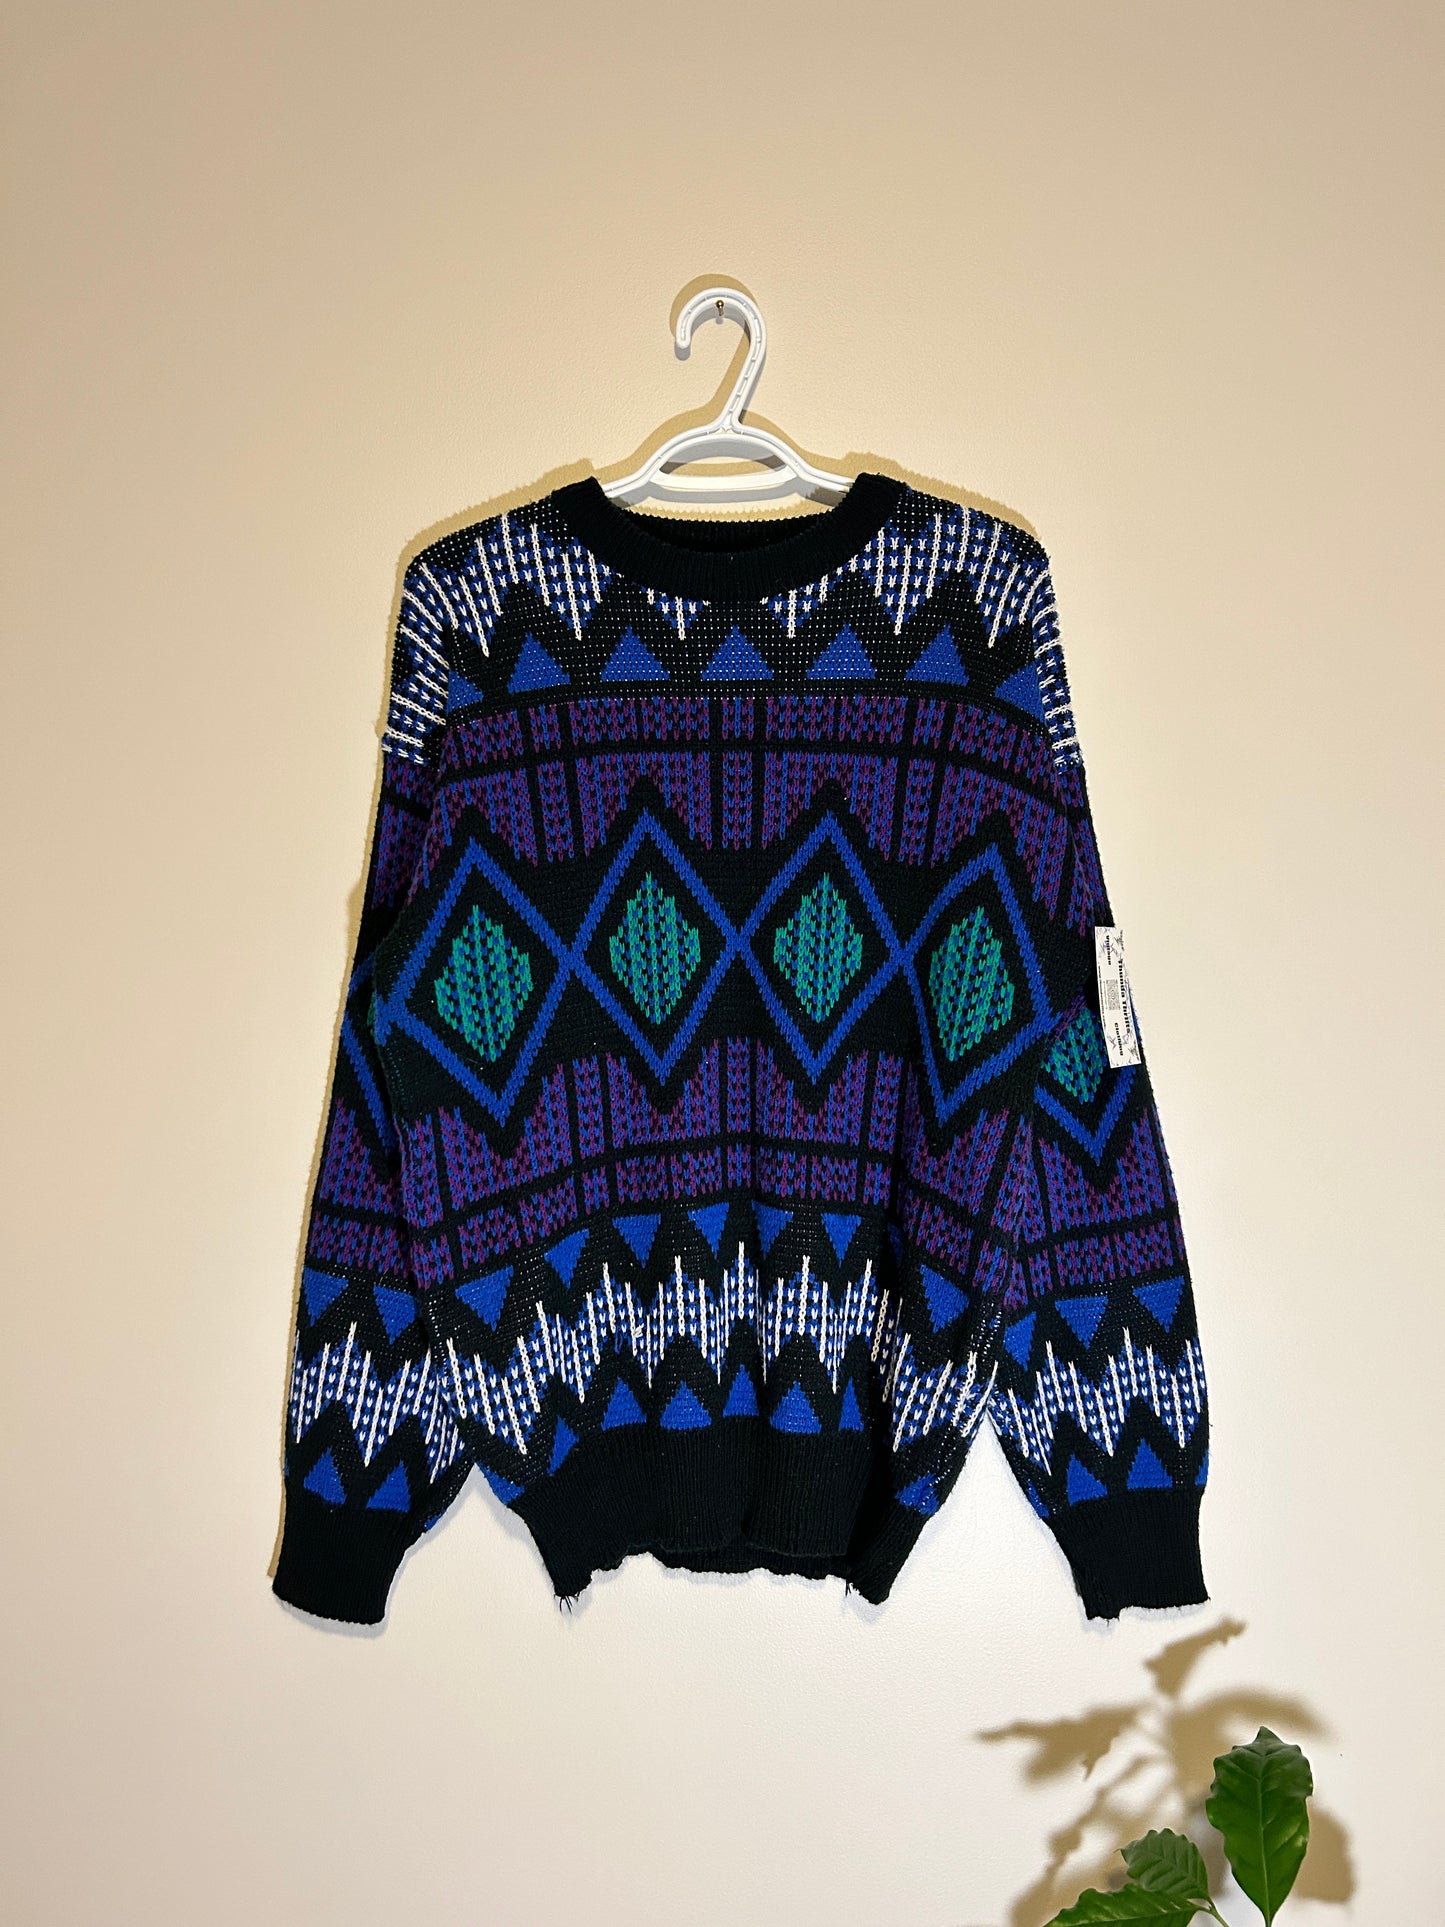 Fine Line Patterned Knit Sweater (M/L)